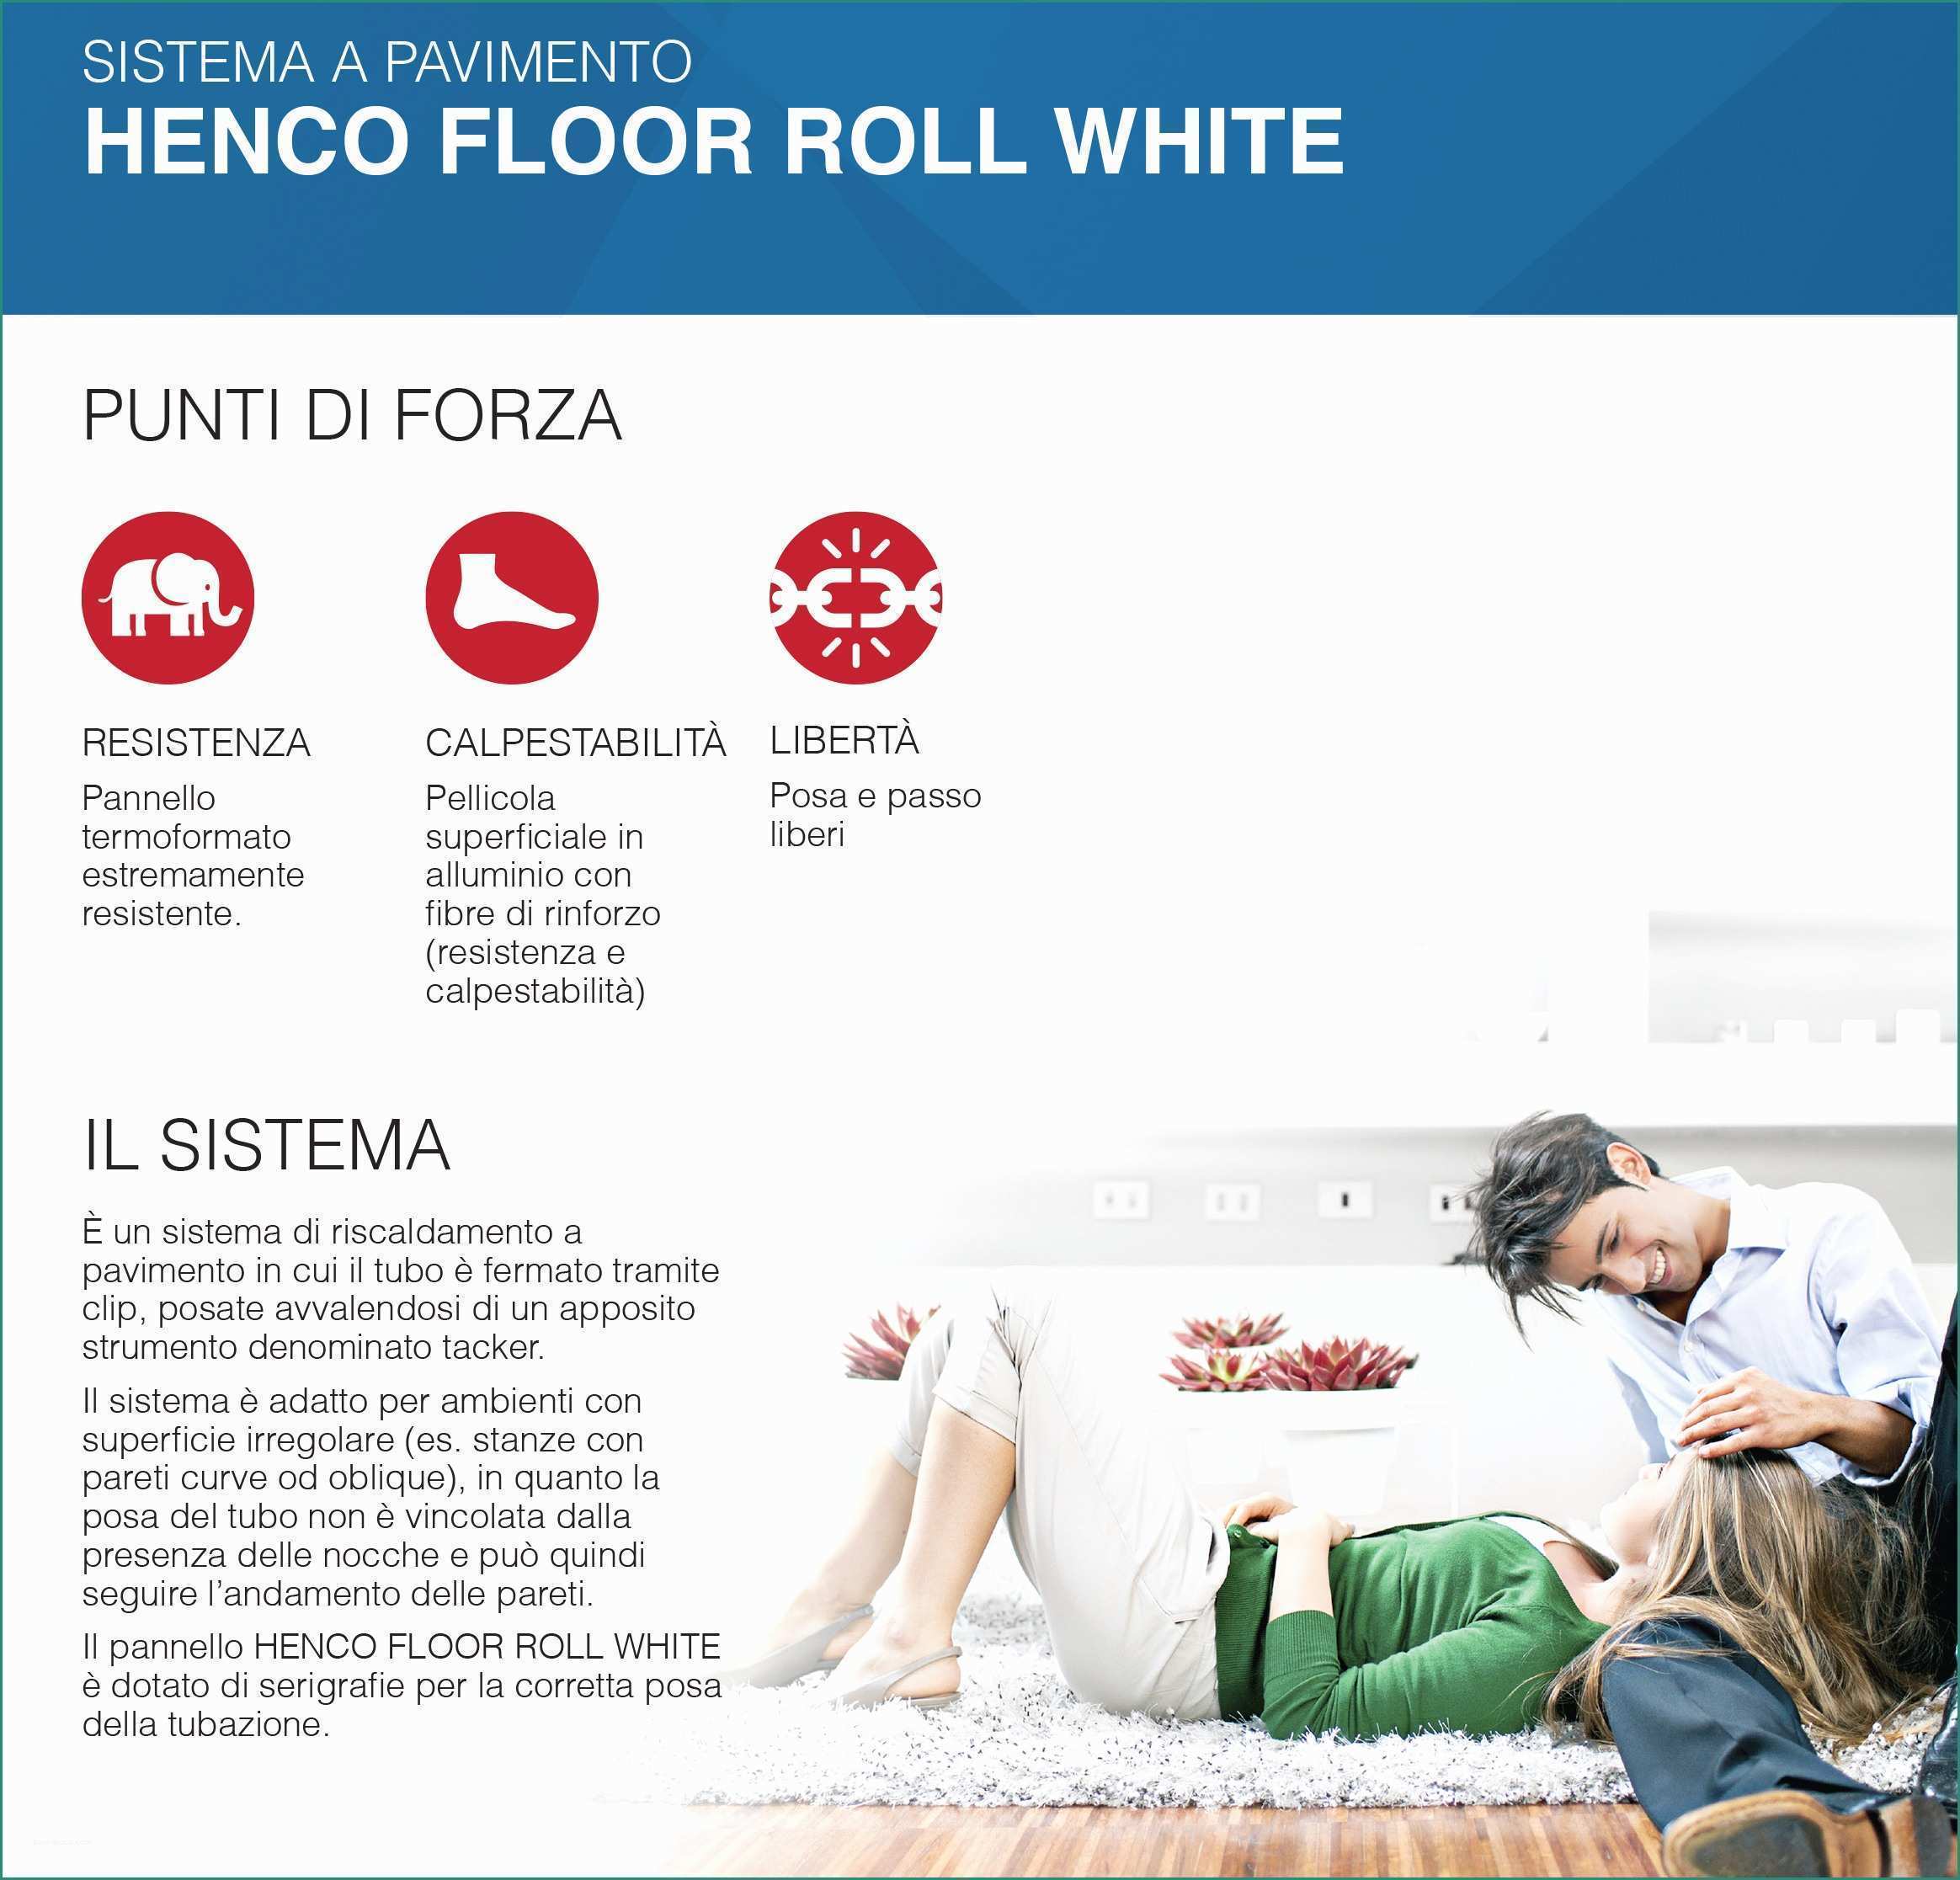 Pannelli Fonoassorbenti Adesivi E Sistema Pavimento Henco Floor Roll White